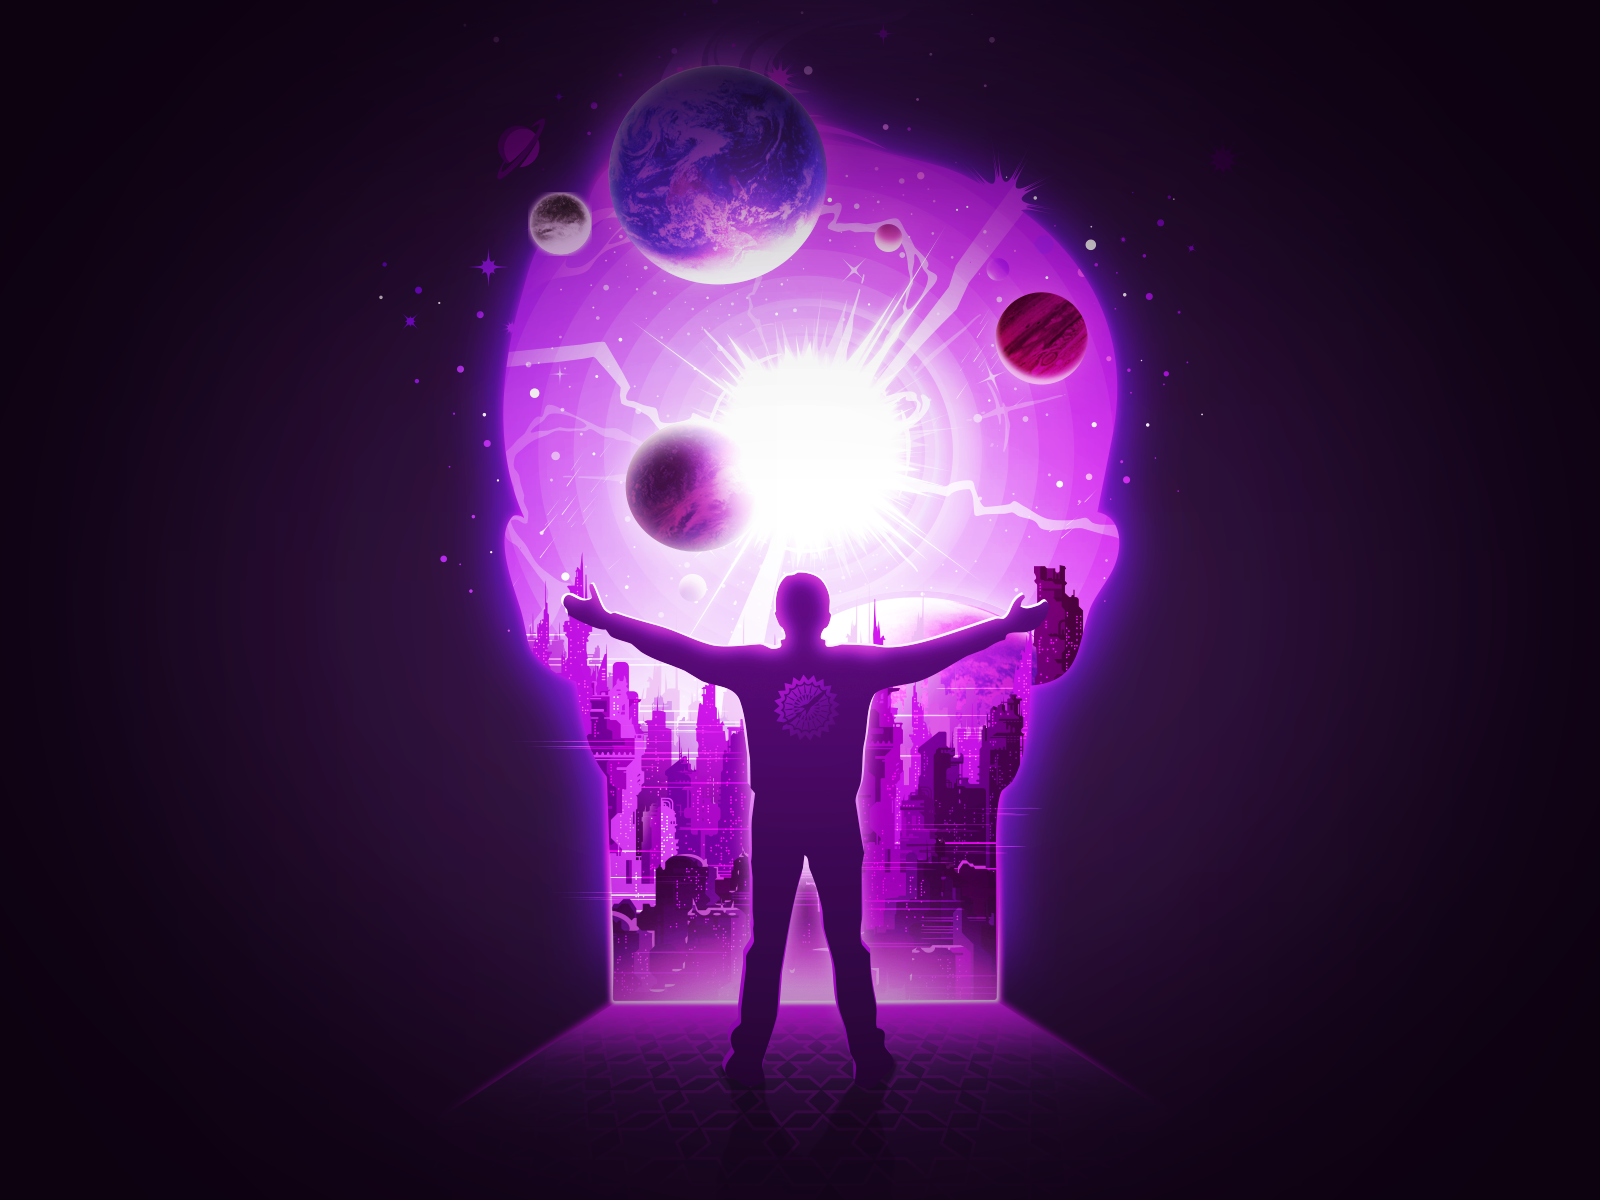 new universe gate illustration